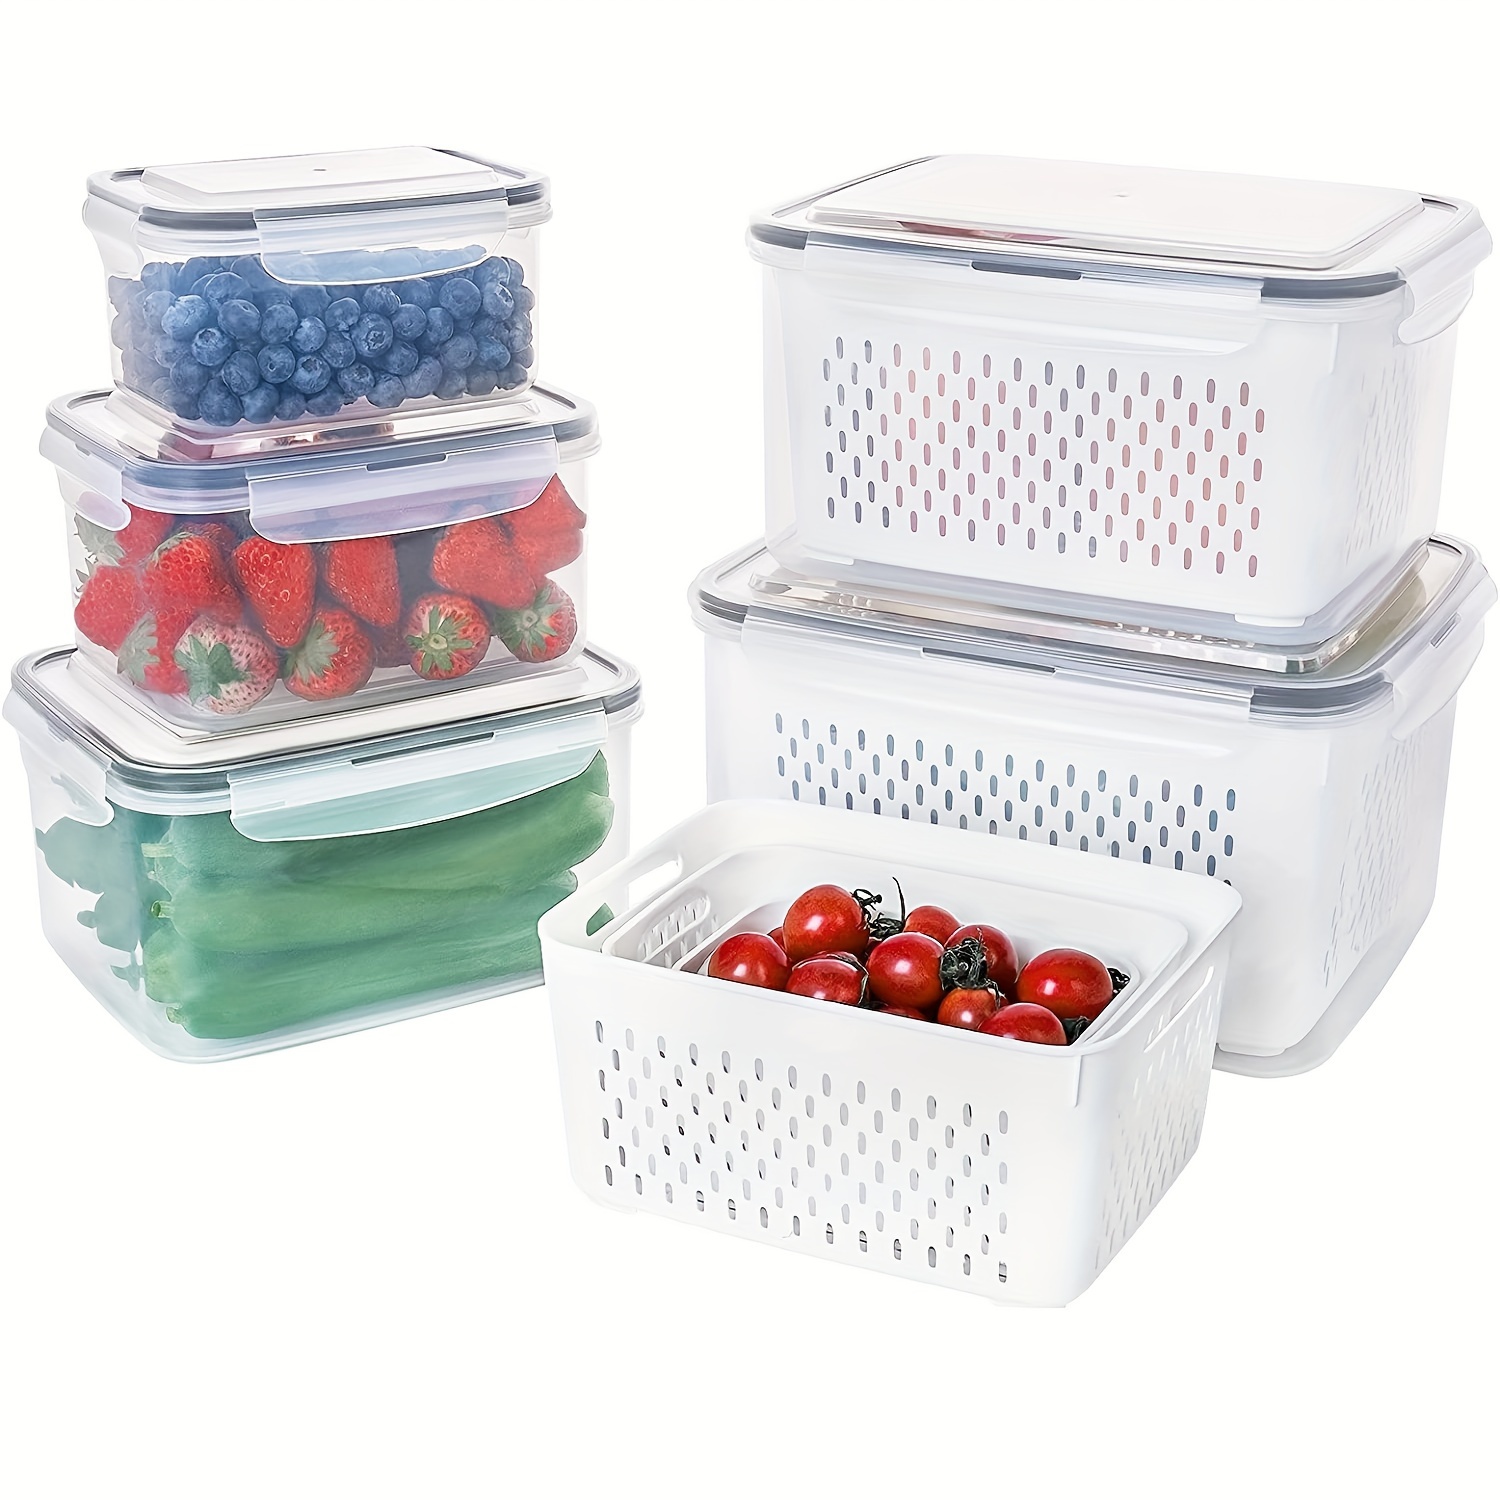 3pcs/set Refrigerator Storage Bins, Fridge Food Storage Container